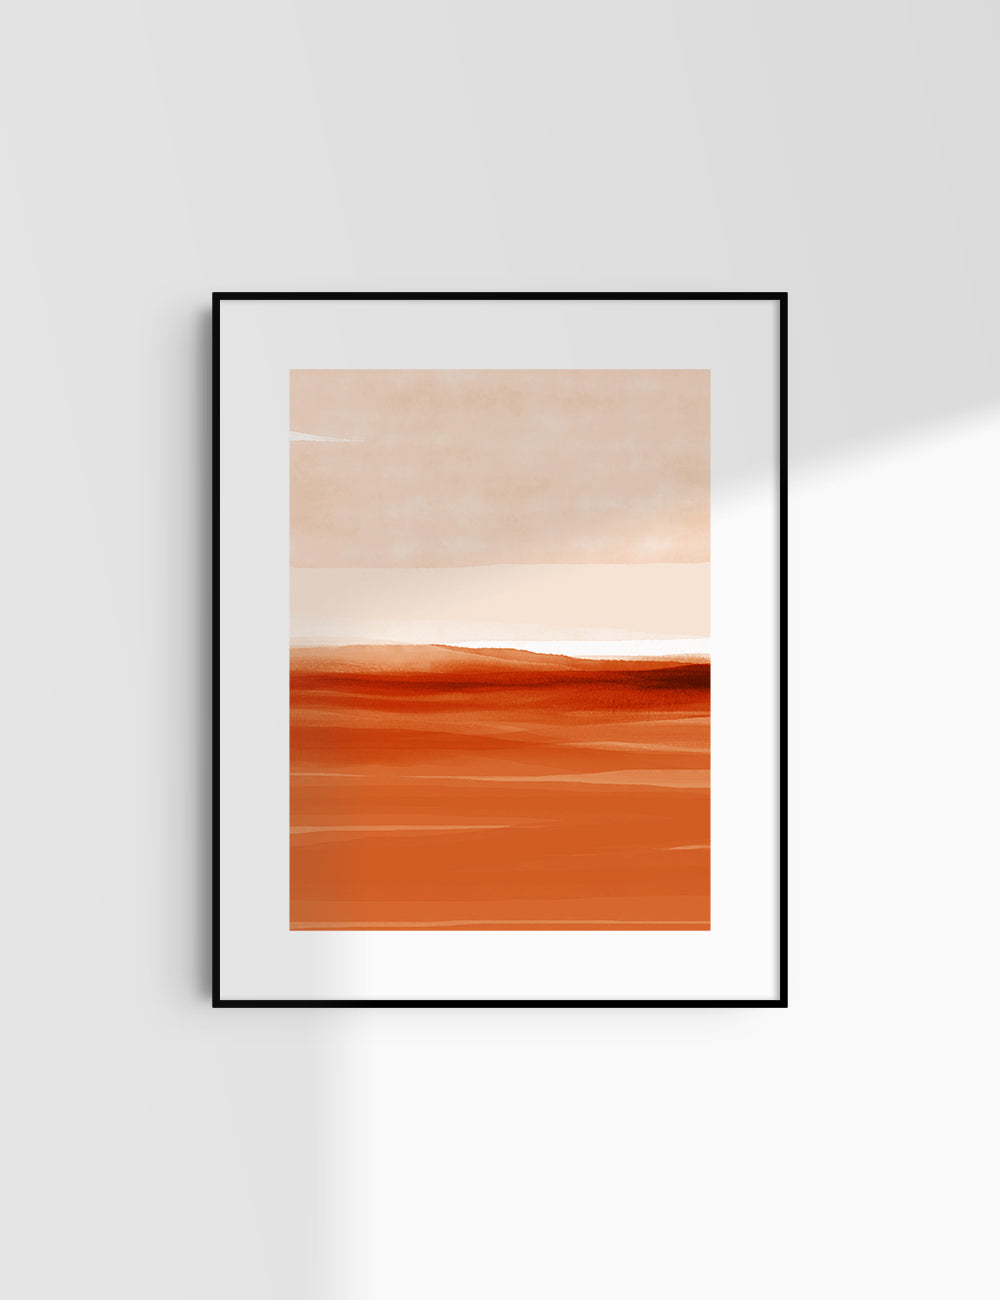 ABSTRACT WATERCOLOR LANDSCAPE. Burnt Orange. Desert. Aesthetic. Minimalist. Printable Wall Art. - PAPER MOON Art & Design